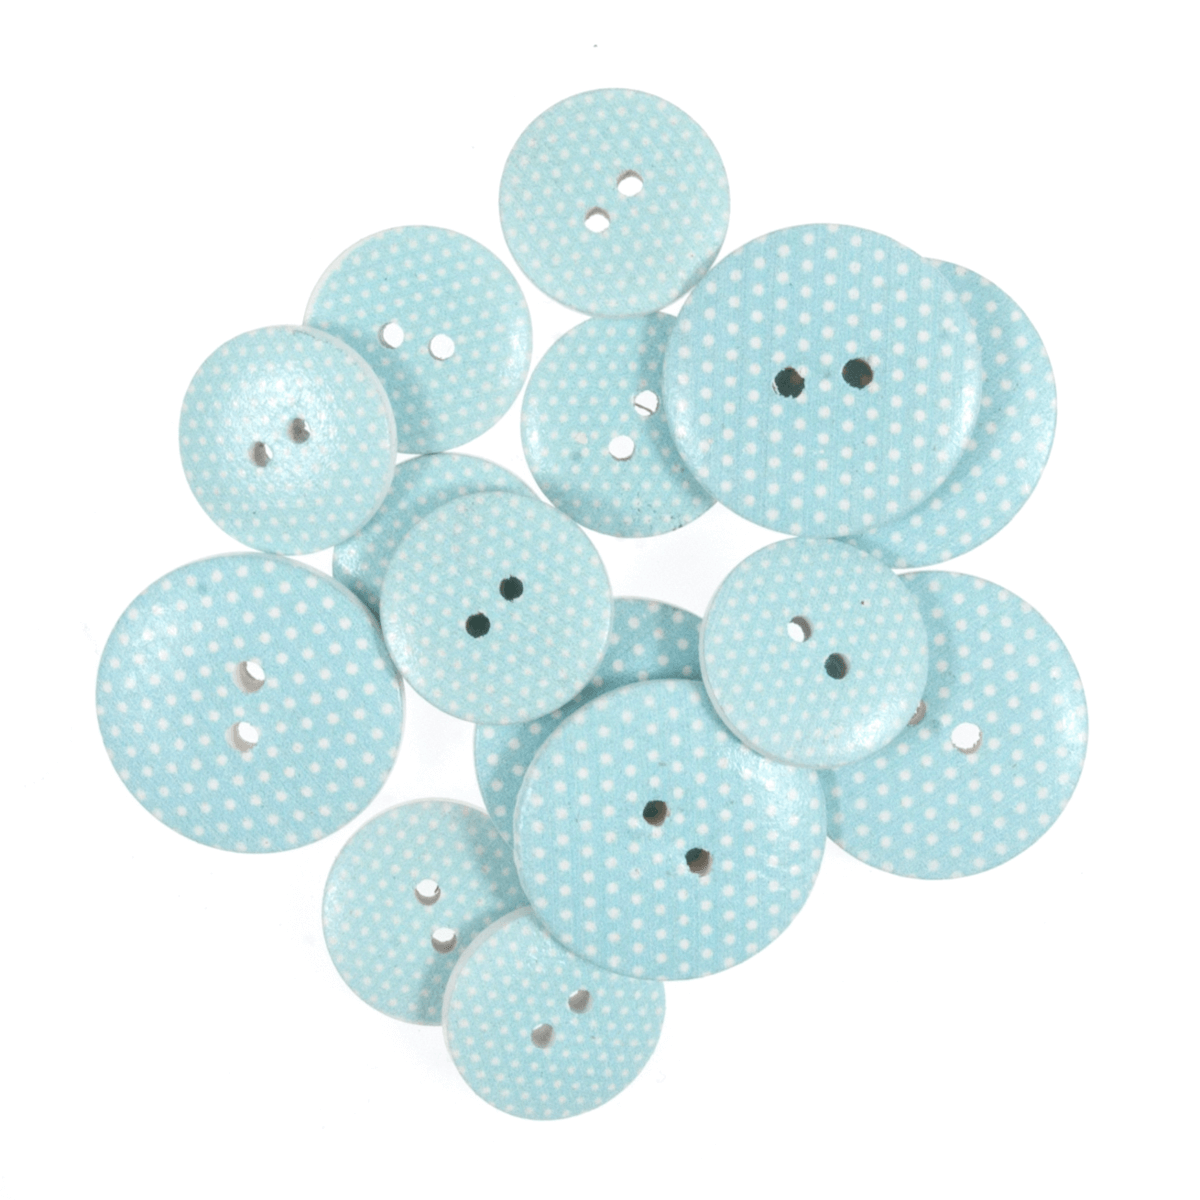 15 x Assorted Pale Blue Pin Spot Wooden Craft Buttons 18mm - 25mm 